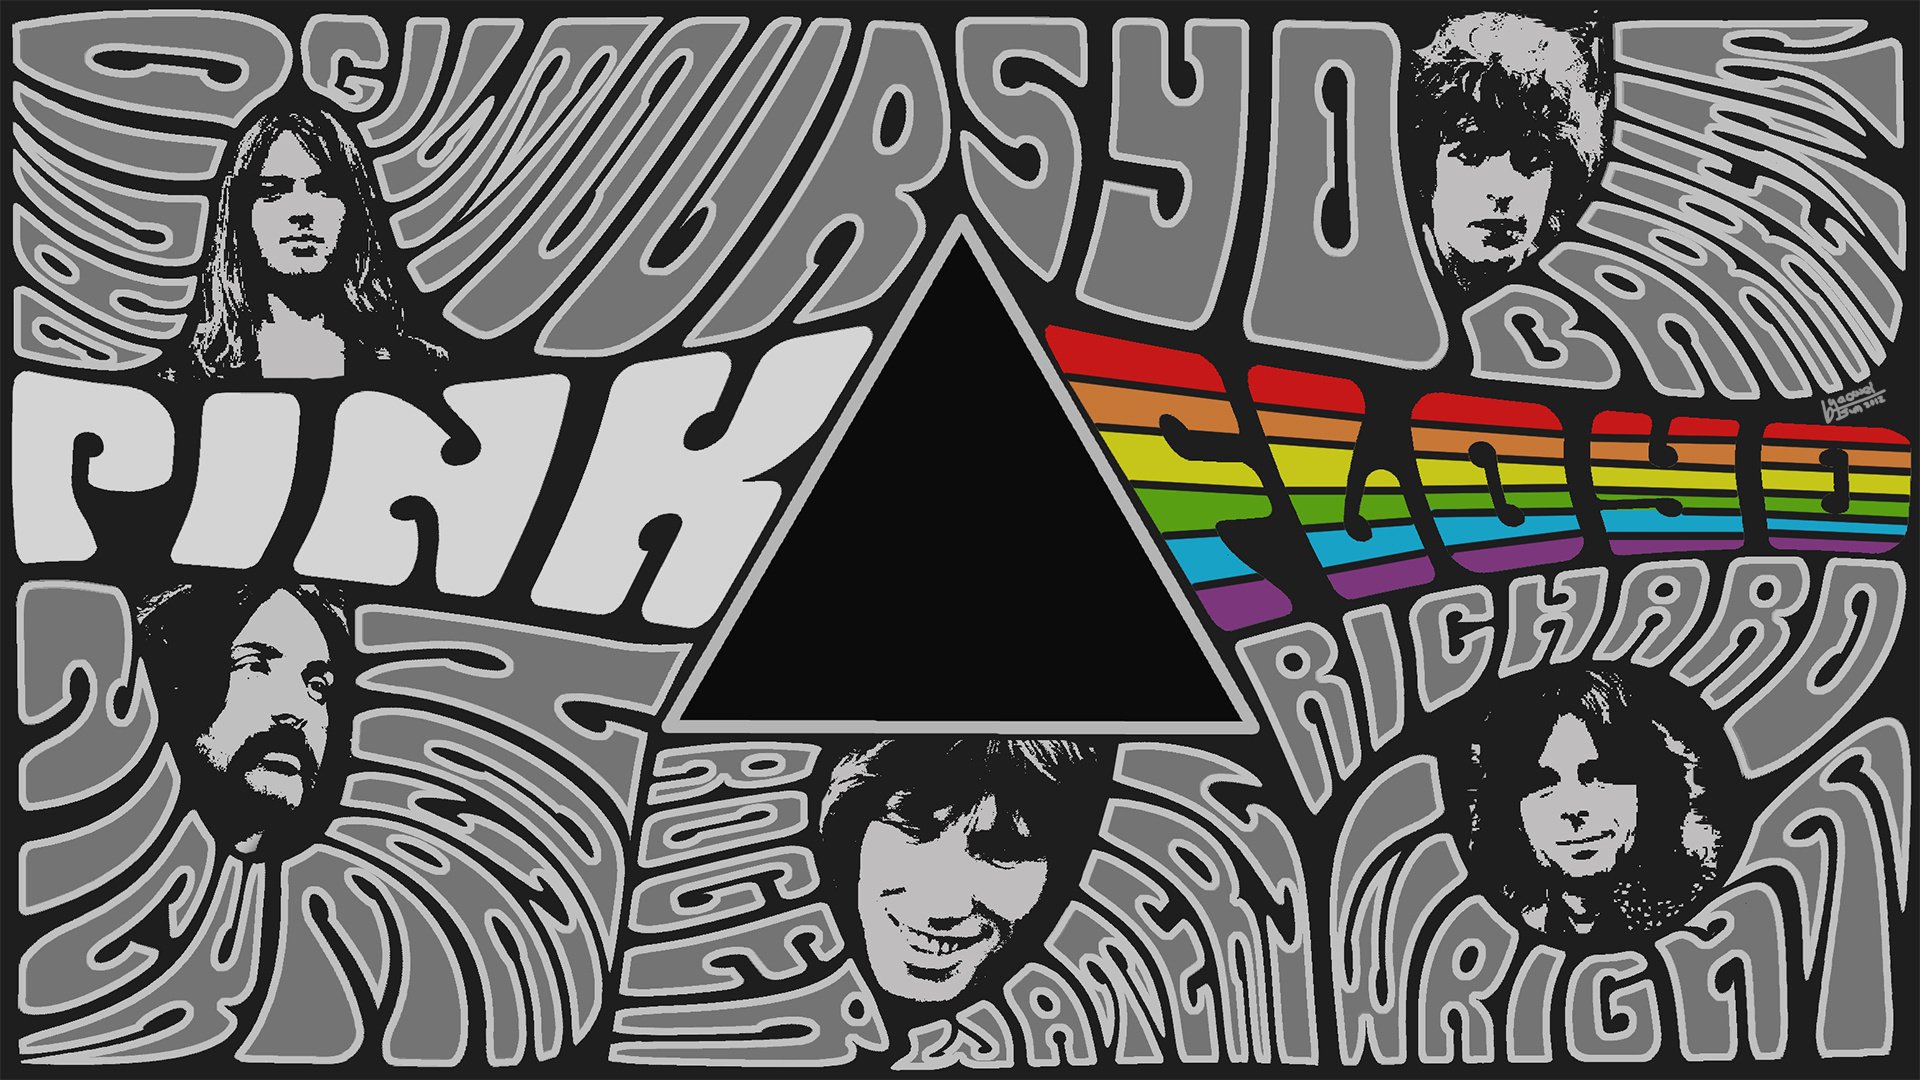  rock classic retro bands groups album covers logo wallpaper background